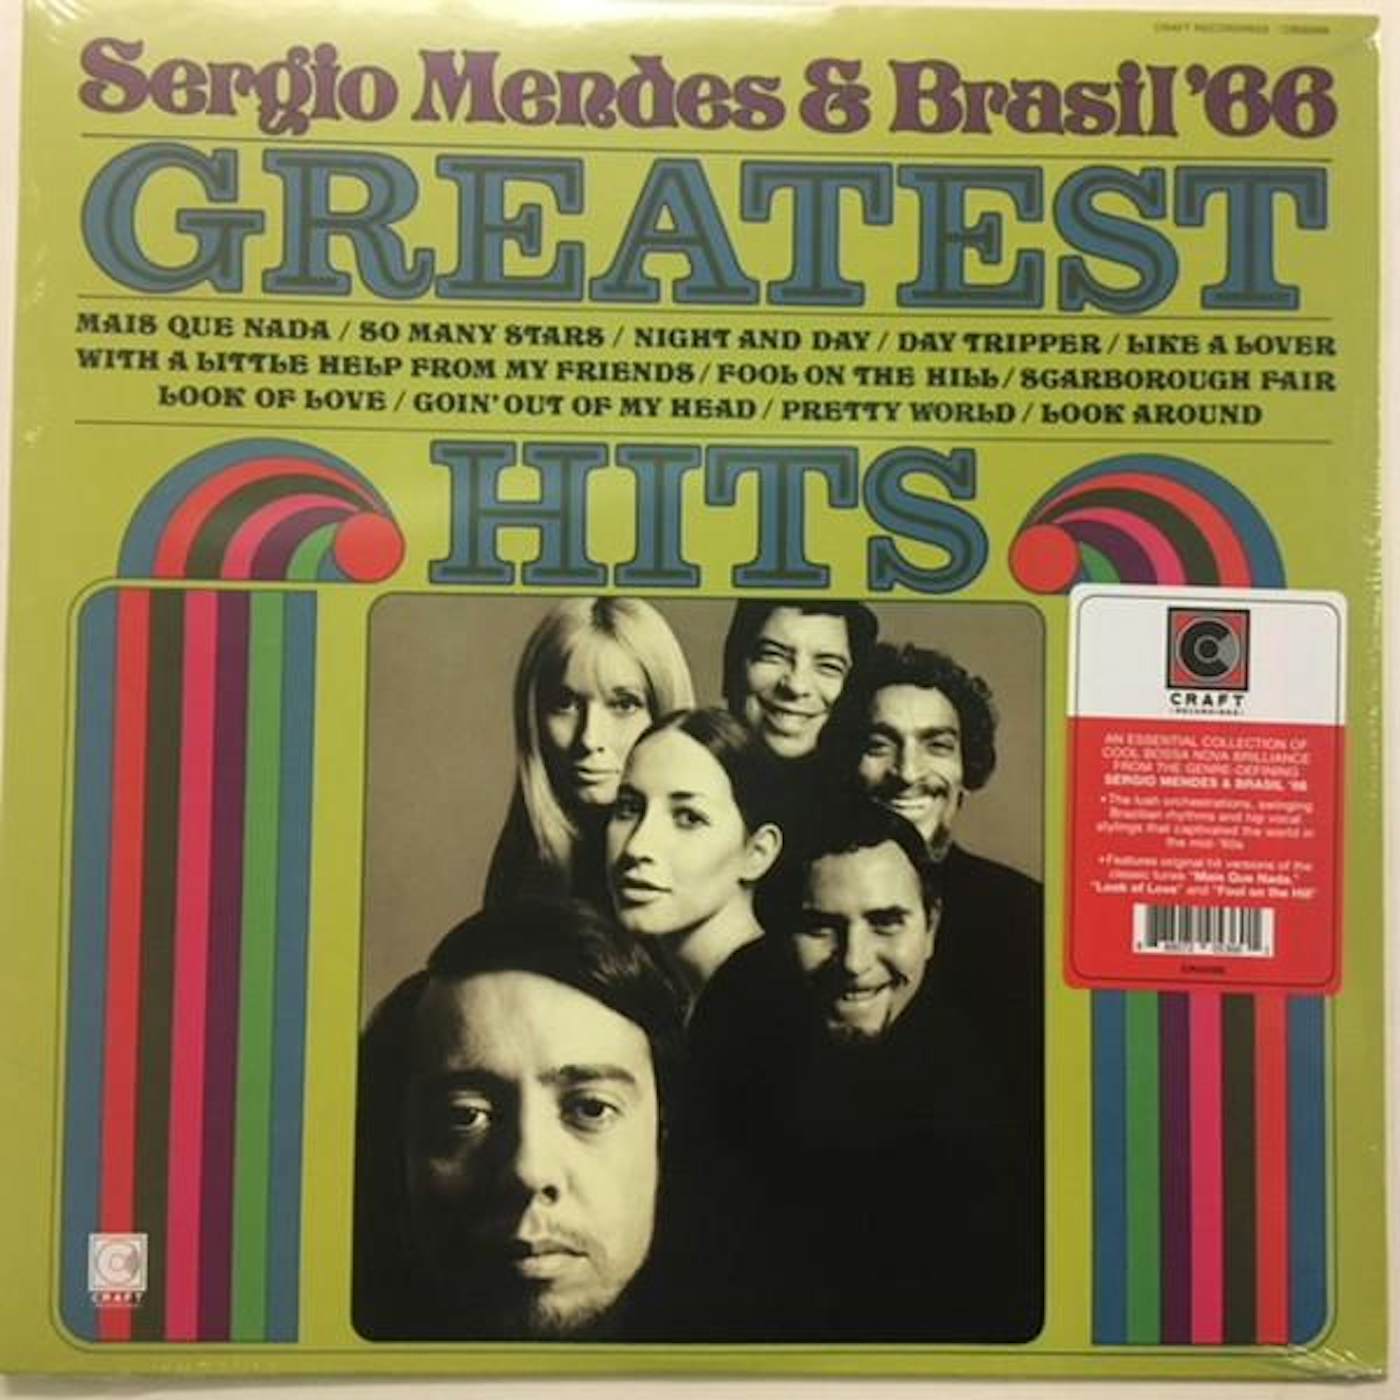 Sergio Mendes & Brasil '66 GREATEST HITS (LP) Vinyl Record